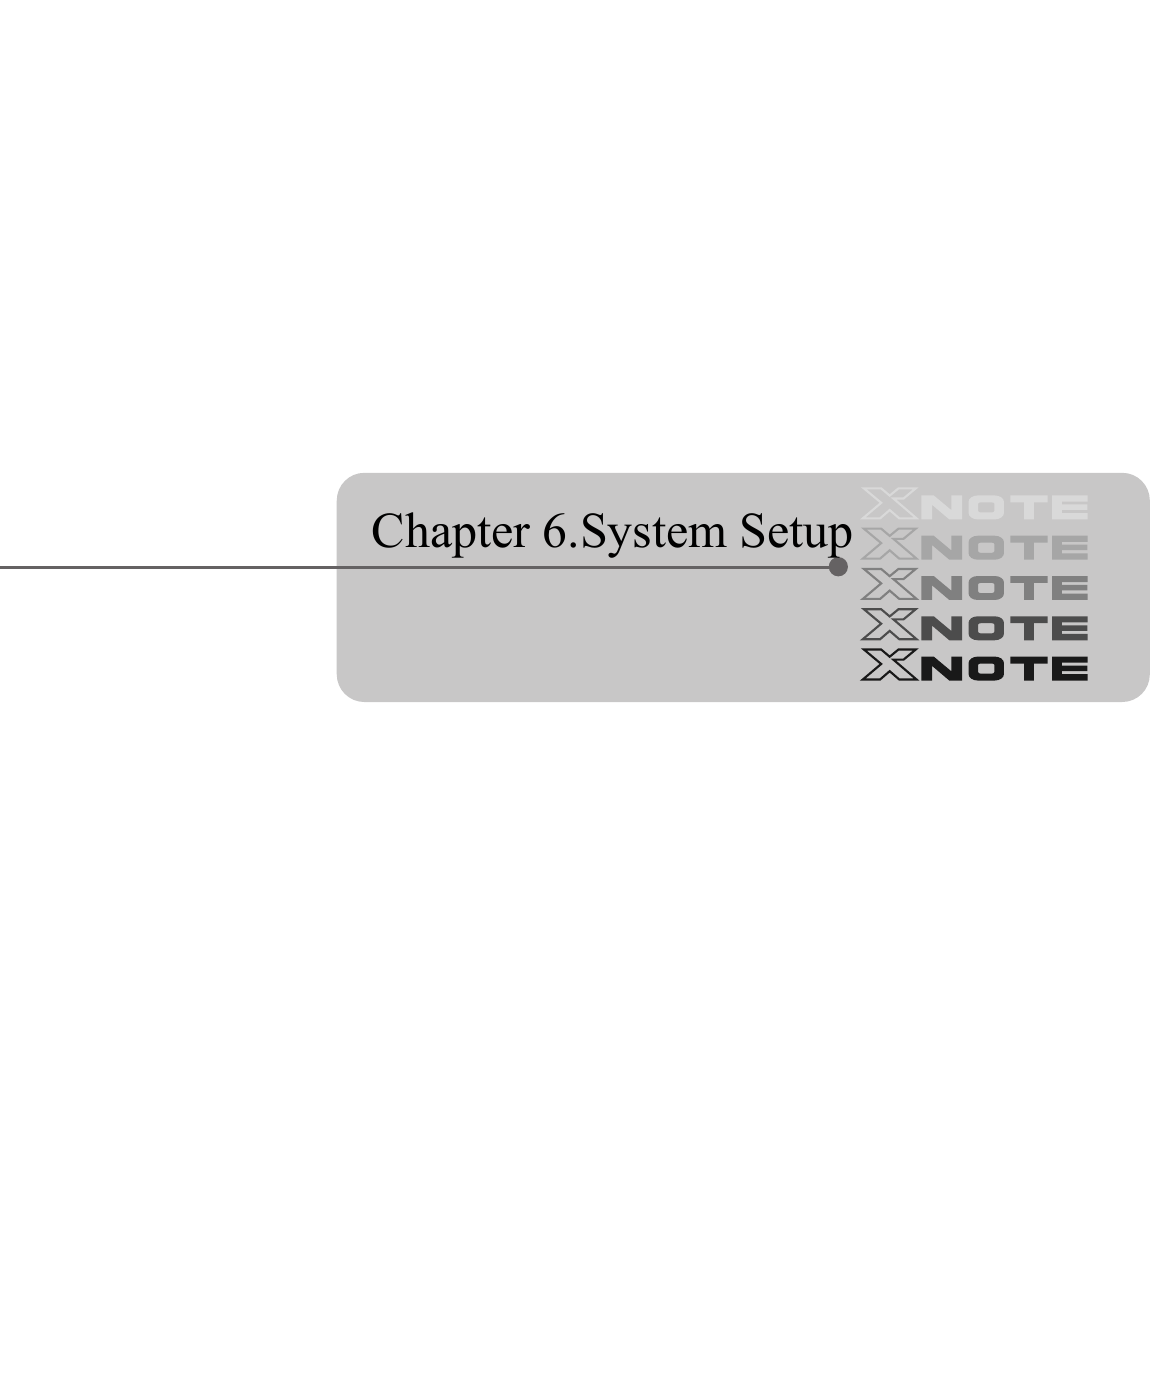  Chapter 6.System Setup